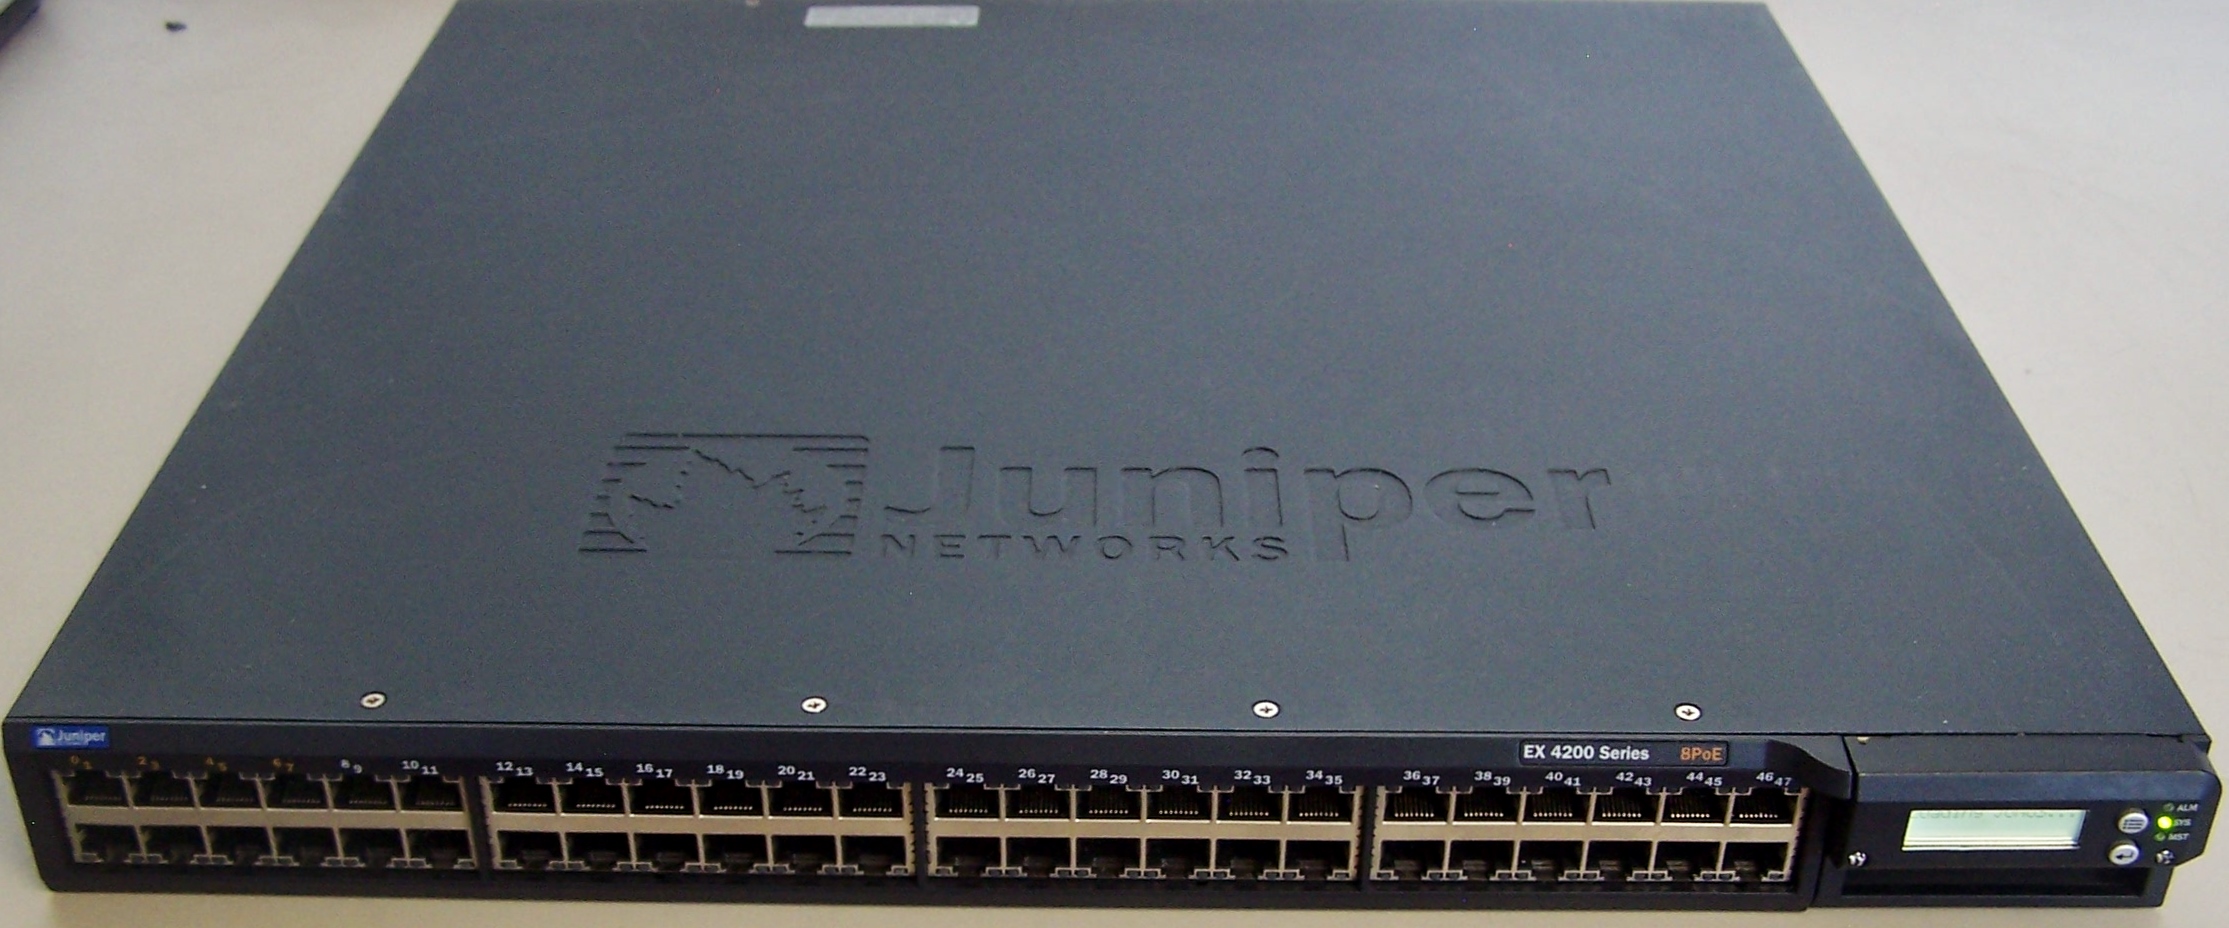 Juniper EX4200-48P 48 Port Ethernet Switch w/ 48 PoE Ports Dual Power Supply 